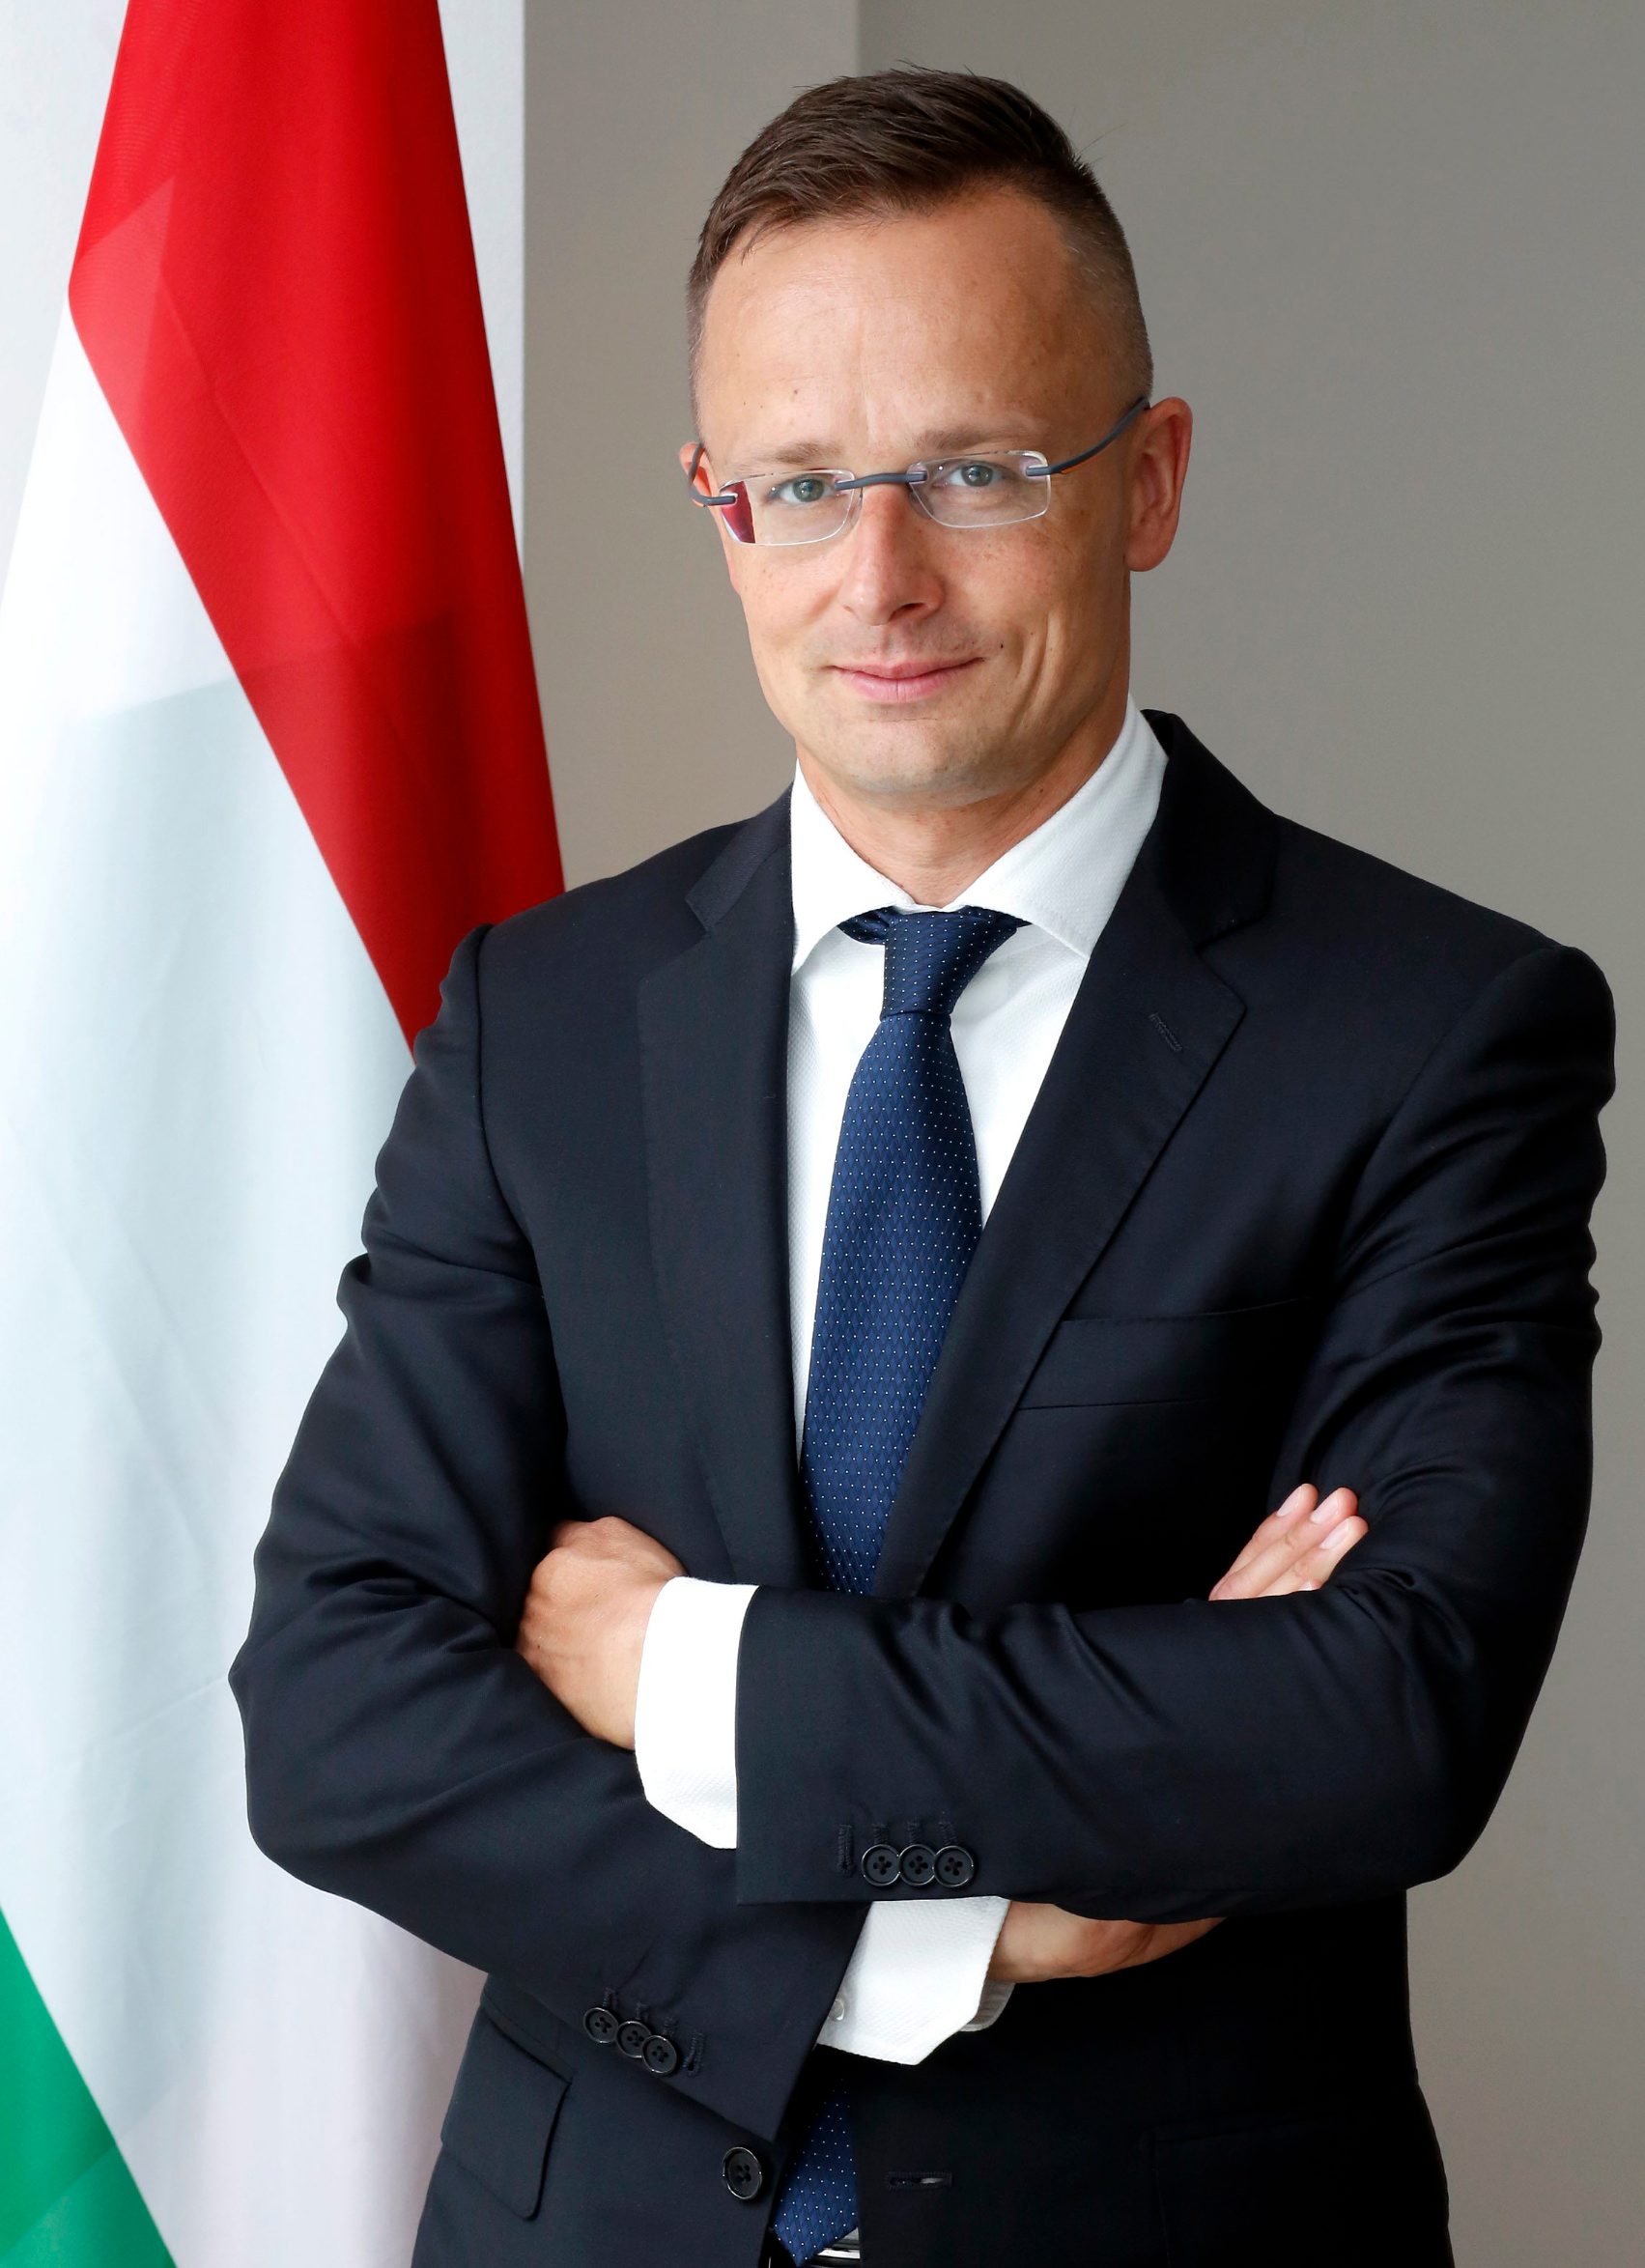 Hungarian minister of foreign affairs and trade Peter Szijjártó